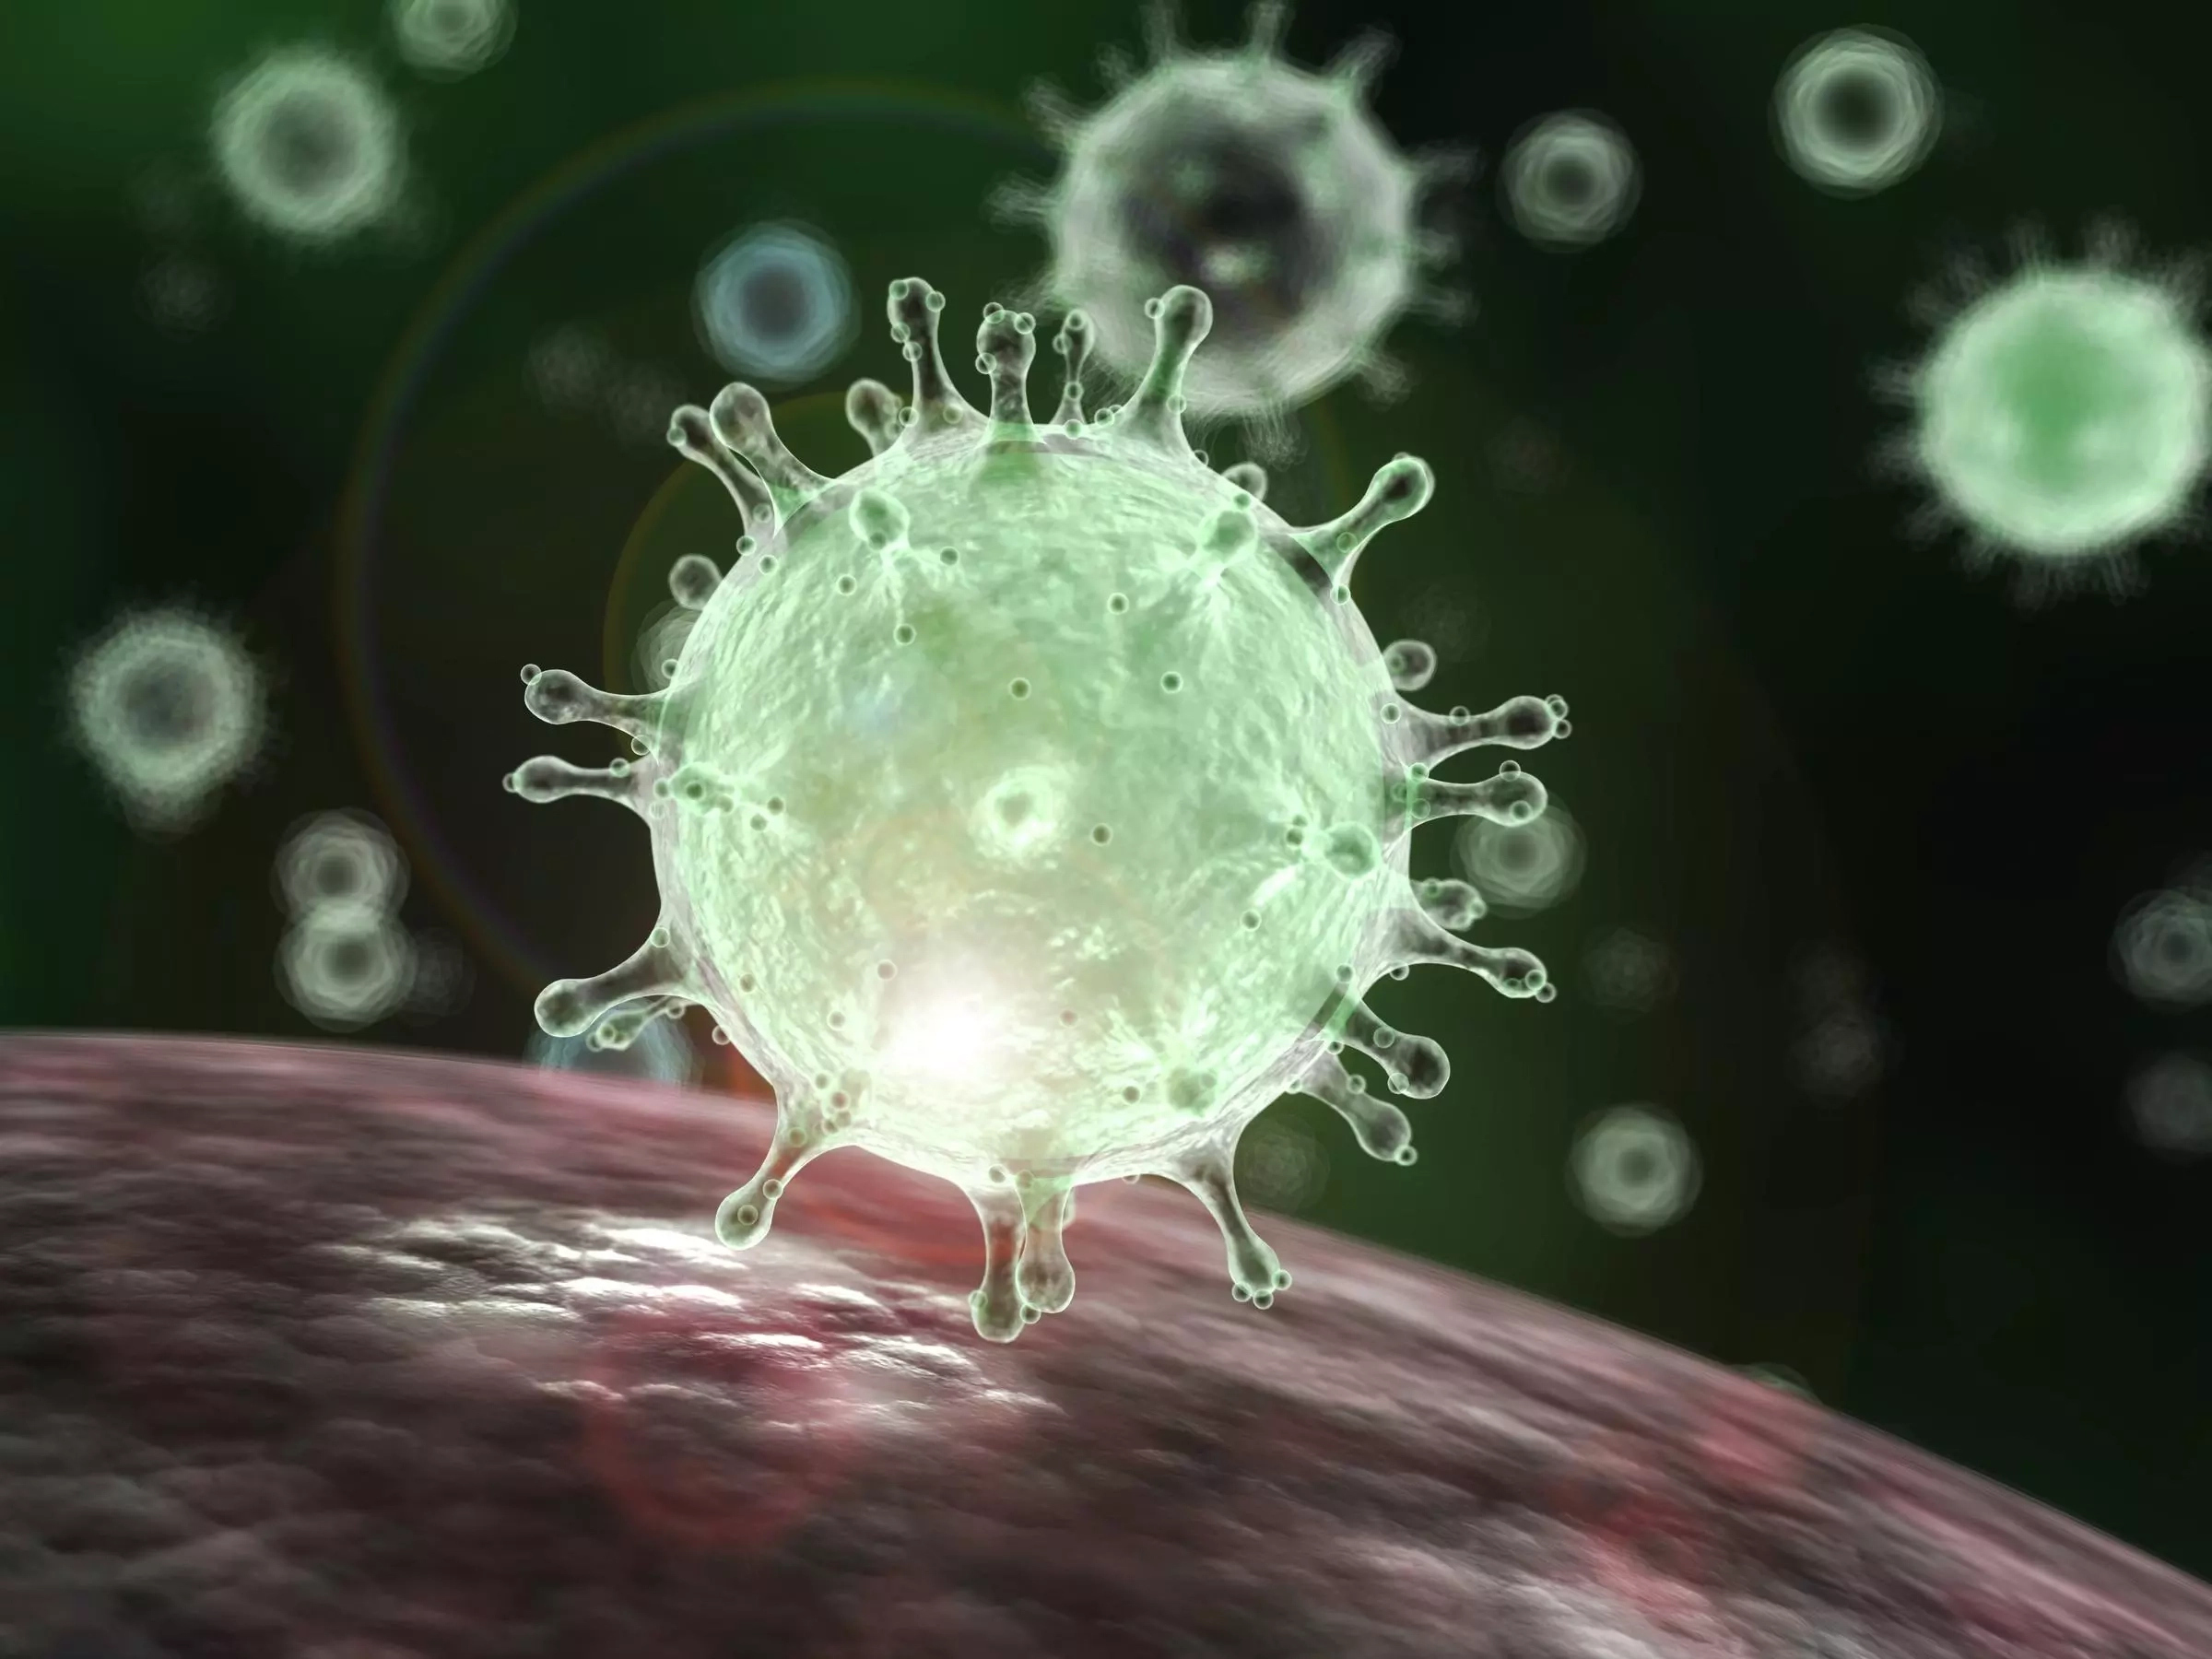 Health Alert: Corona Virus may have spread to Africa - HSEWatch.com